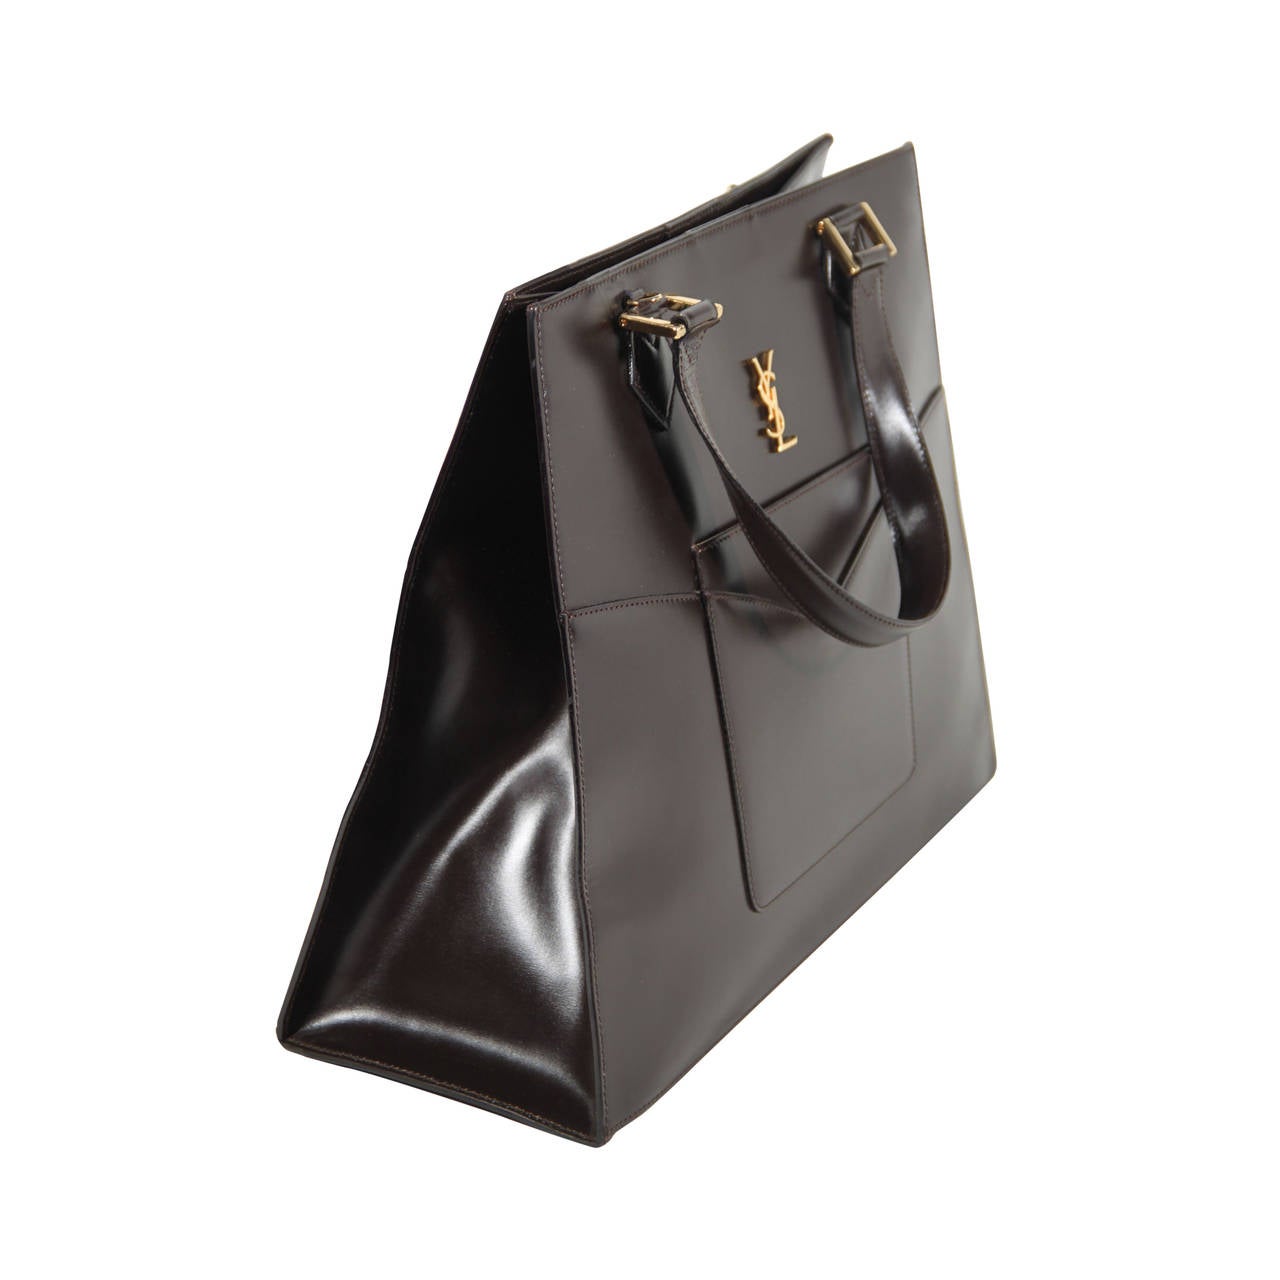 ysl outlet usa - YVES SAINT LAURENT Vintage Brown Leather SATCHEL Handbag TOTE w ...